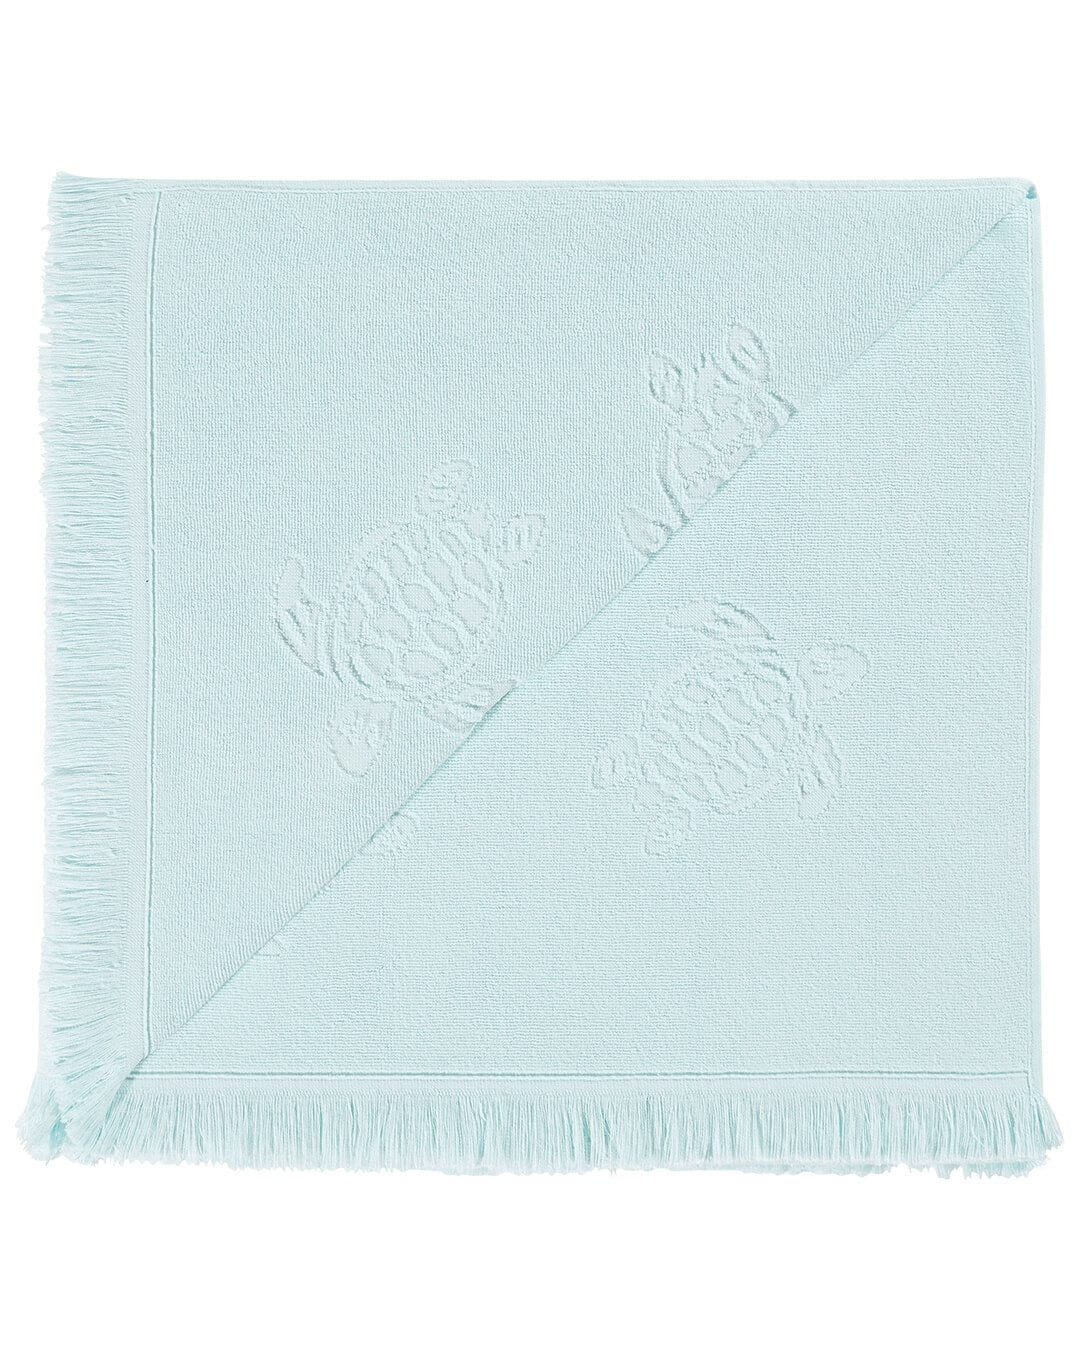 Vilebrequin Towel One Size Vilebrequin Organic Cotton Light Blue Beach Towel Turtles Jacquard